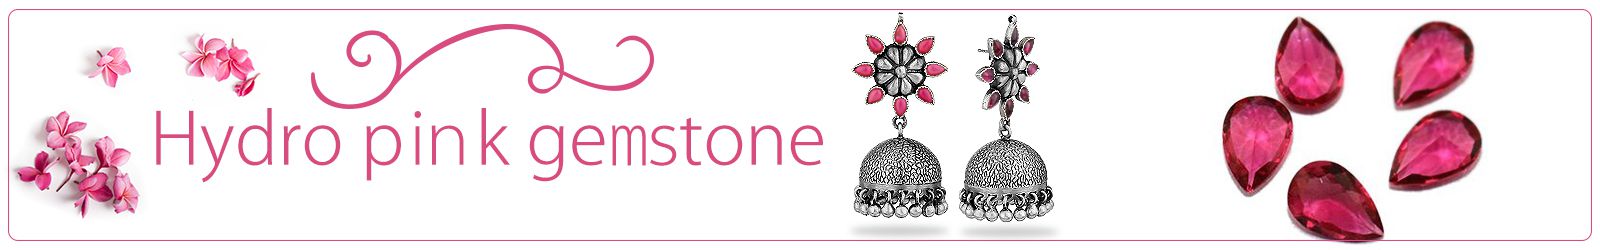 Online Wholesale Hydro Pink Gemstone Jewelry Store, Shop in Jaipur